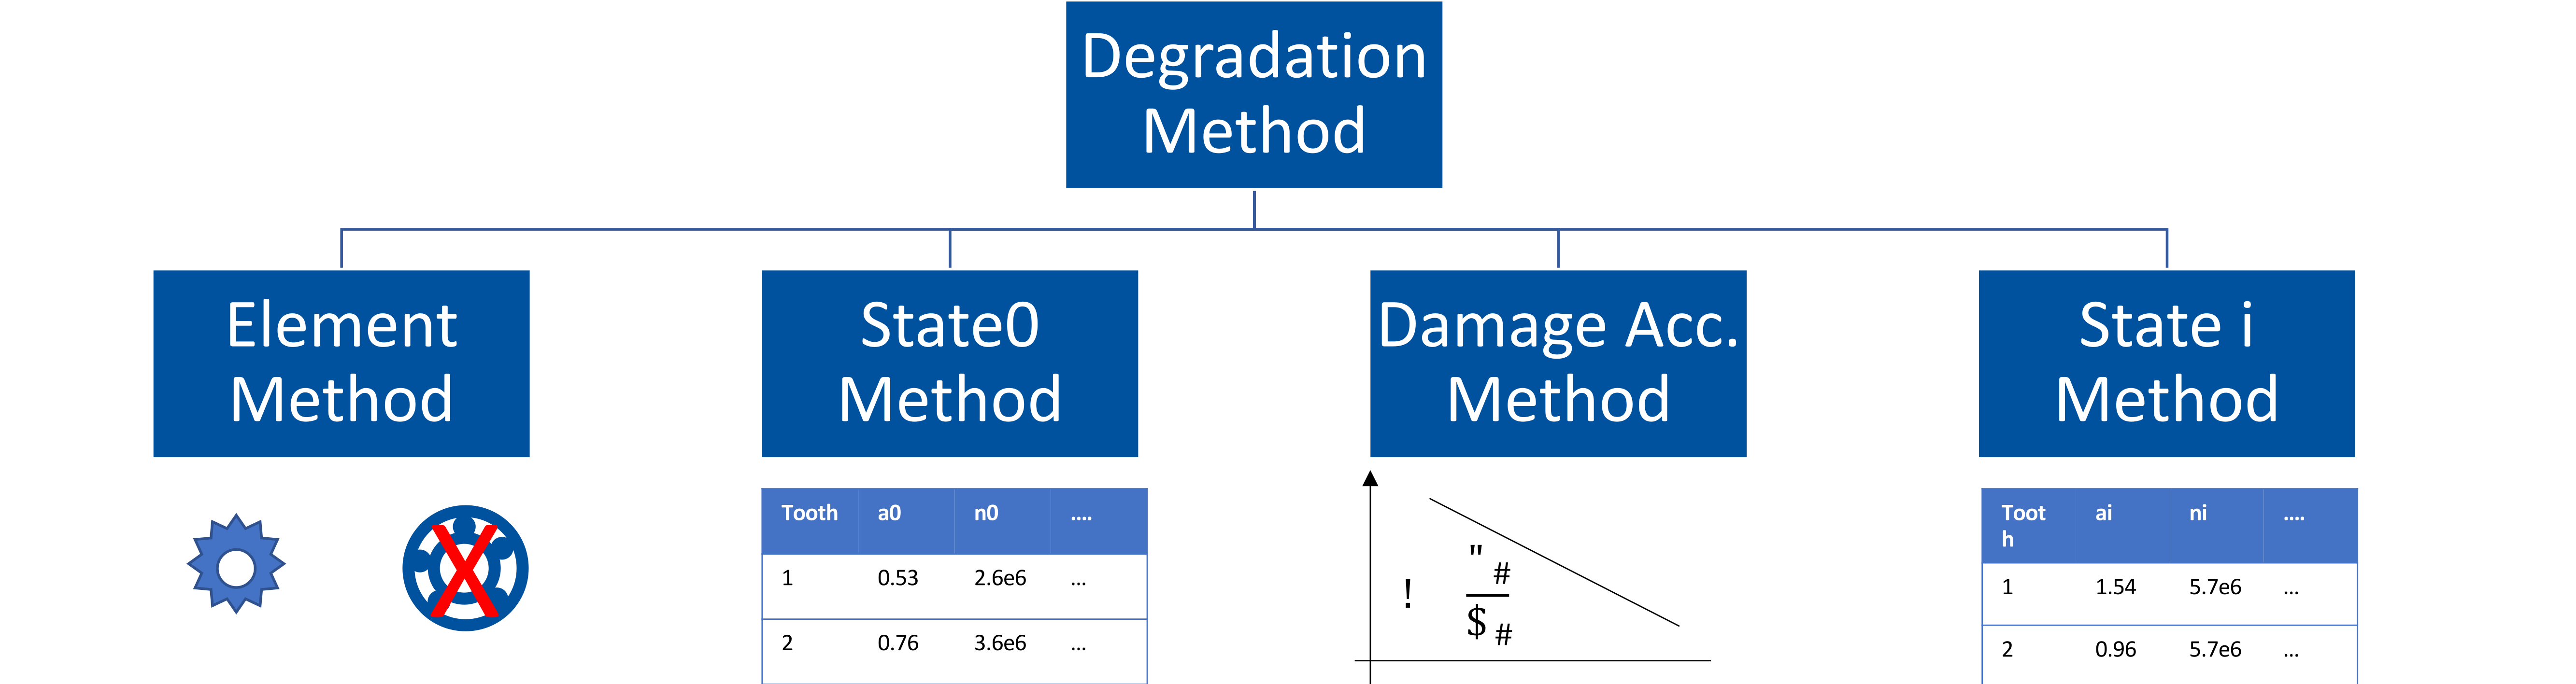 Degradation_Method.png